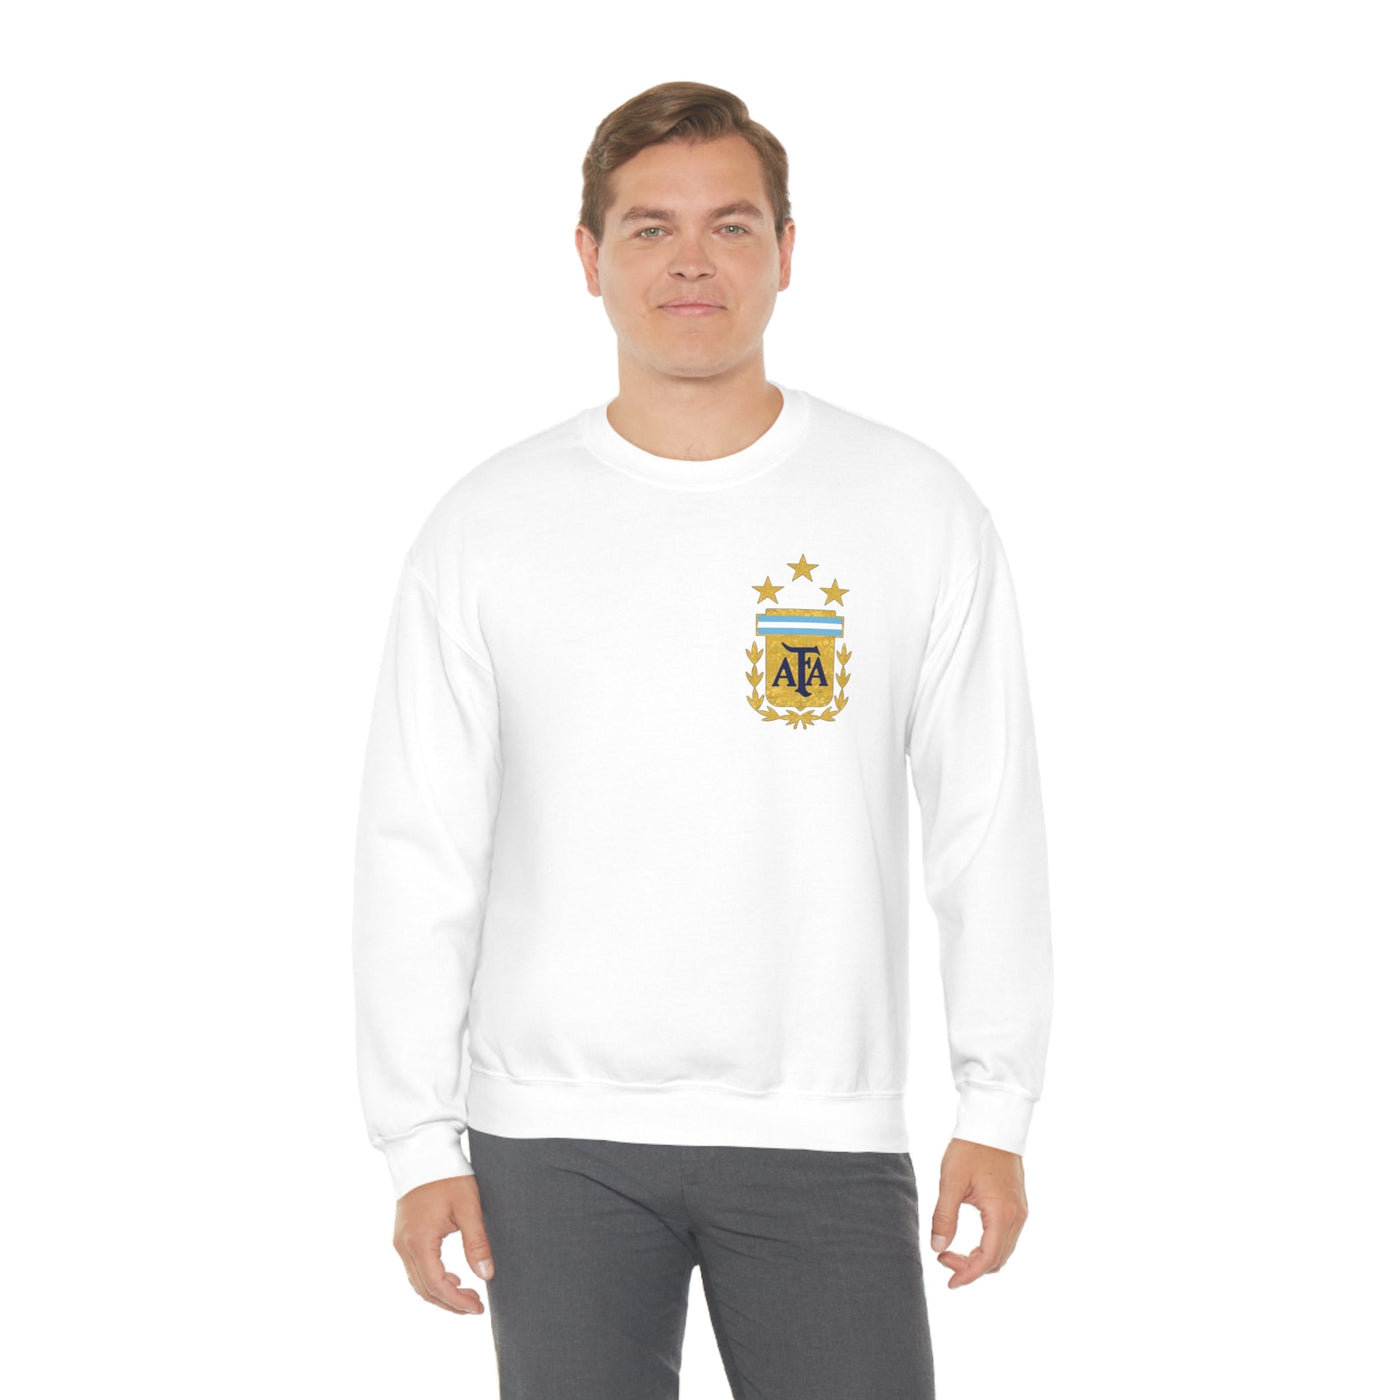 Messi Fashion Sweatshirt | Argentina Soccer n.10